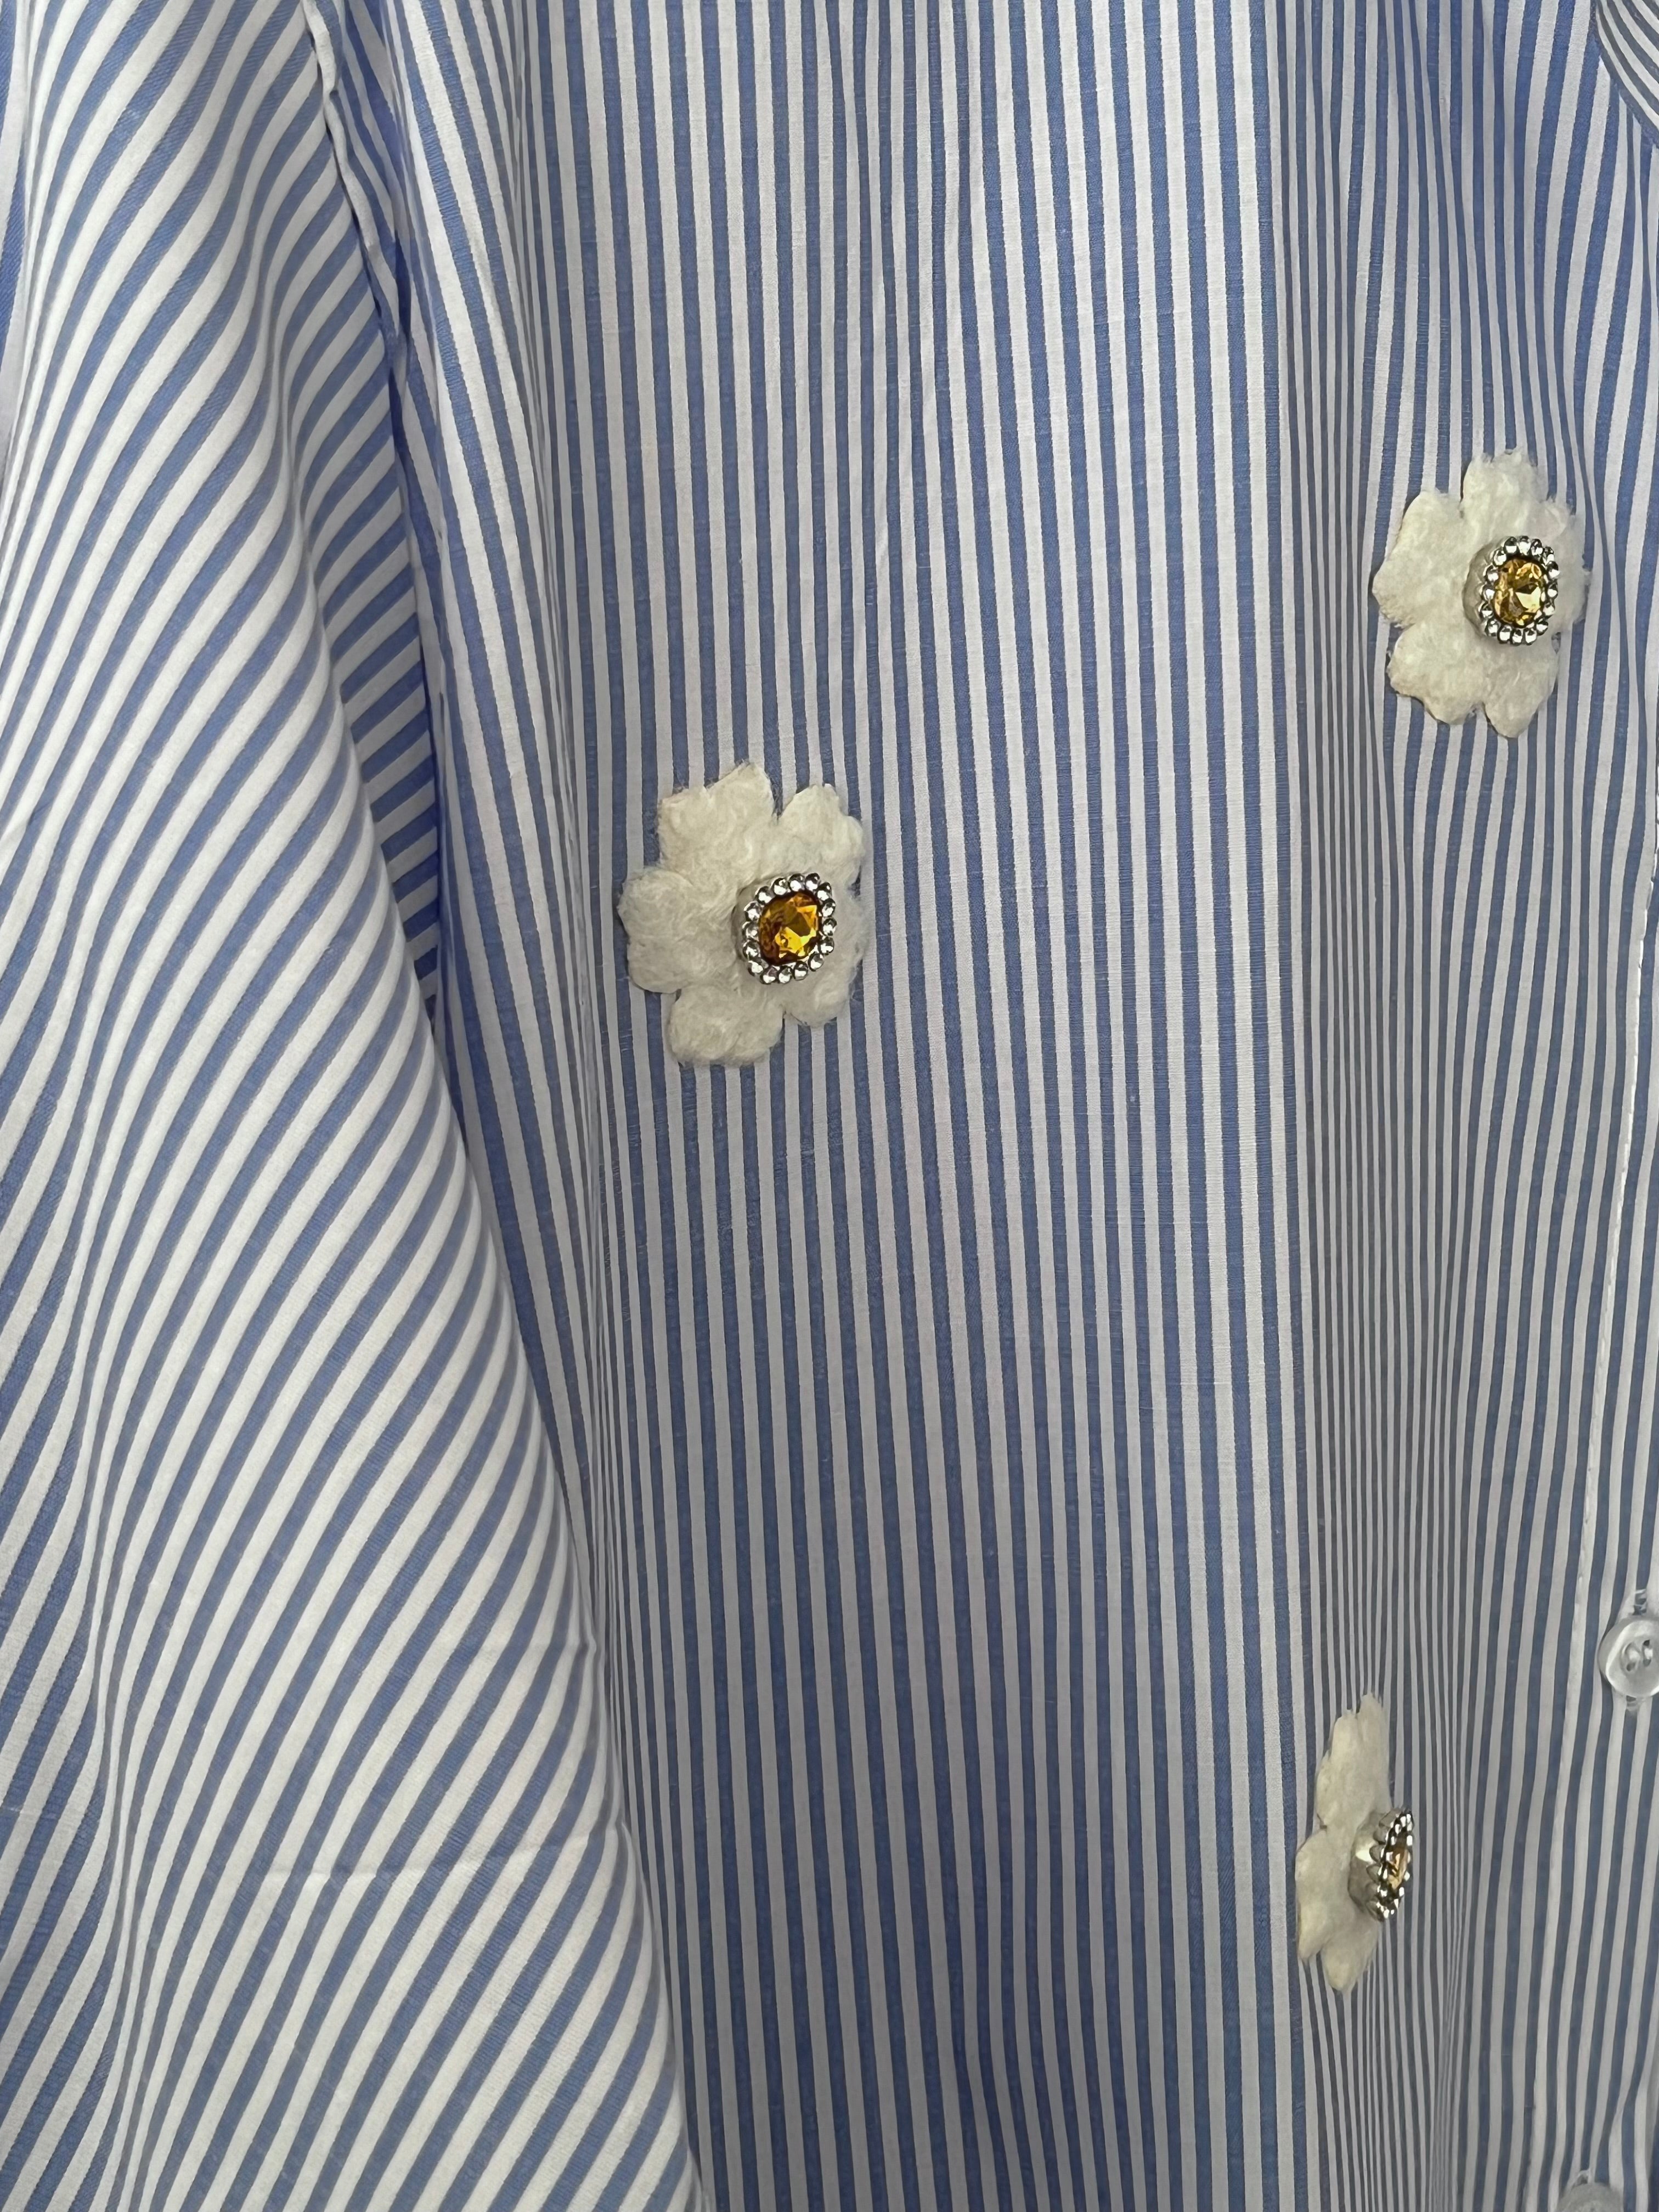 Crisp Stripe Shirt with Flowers